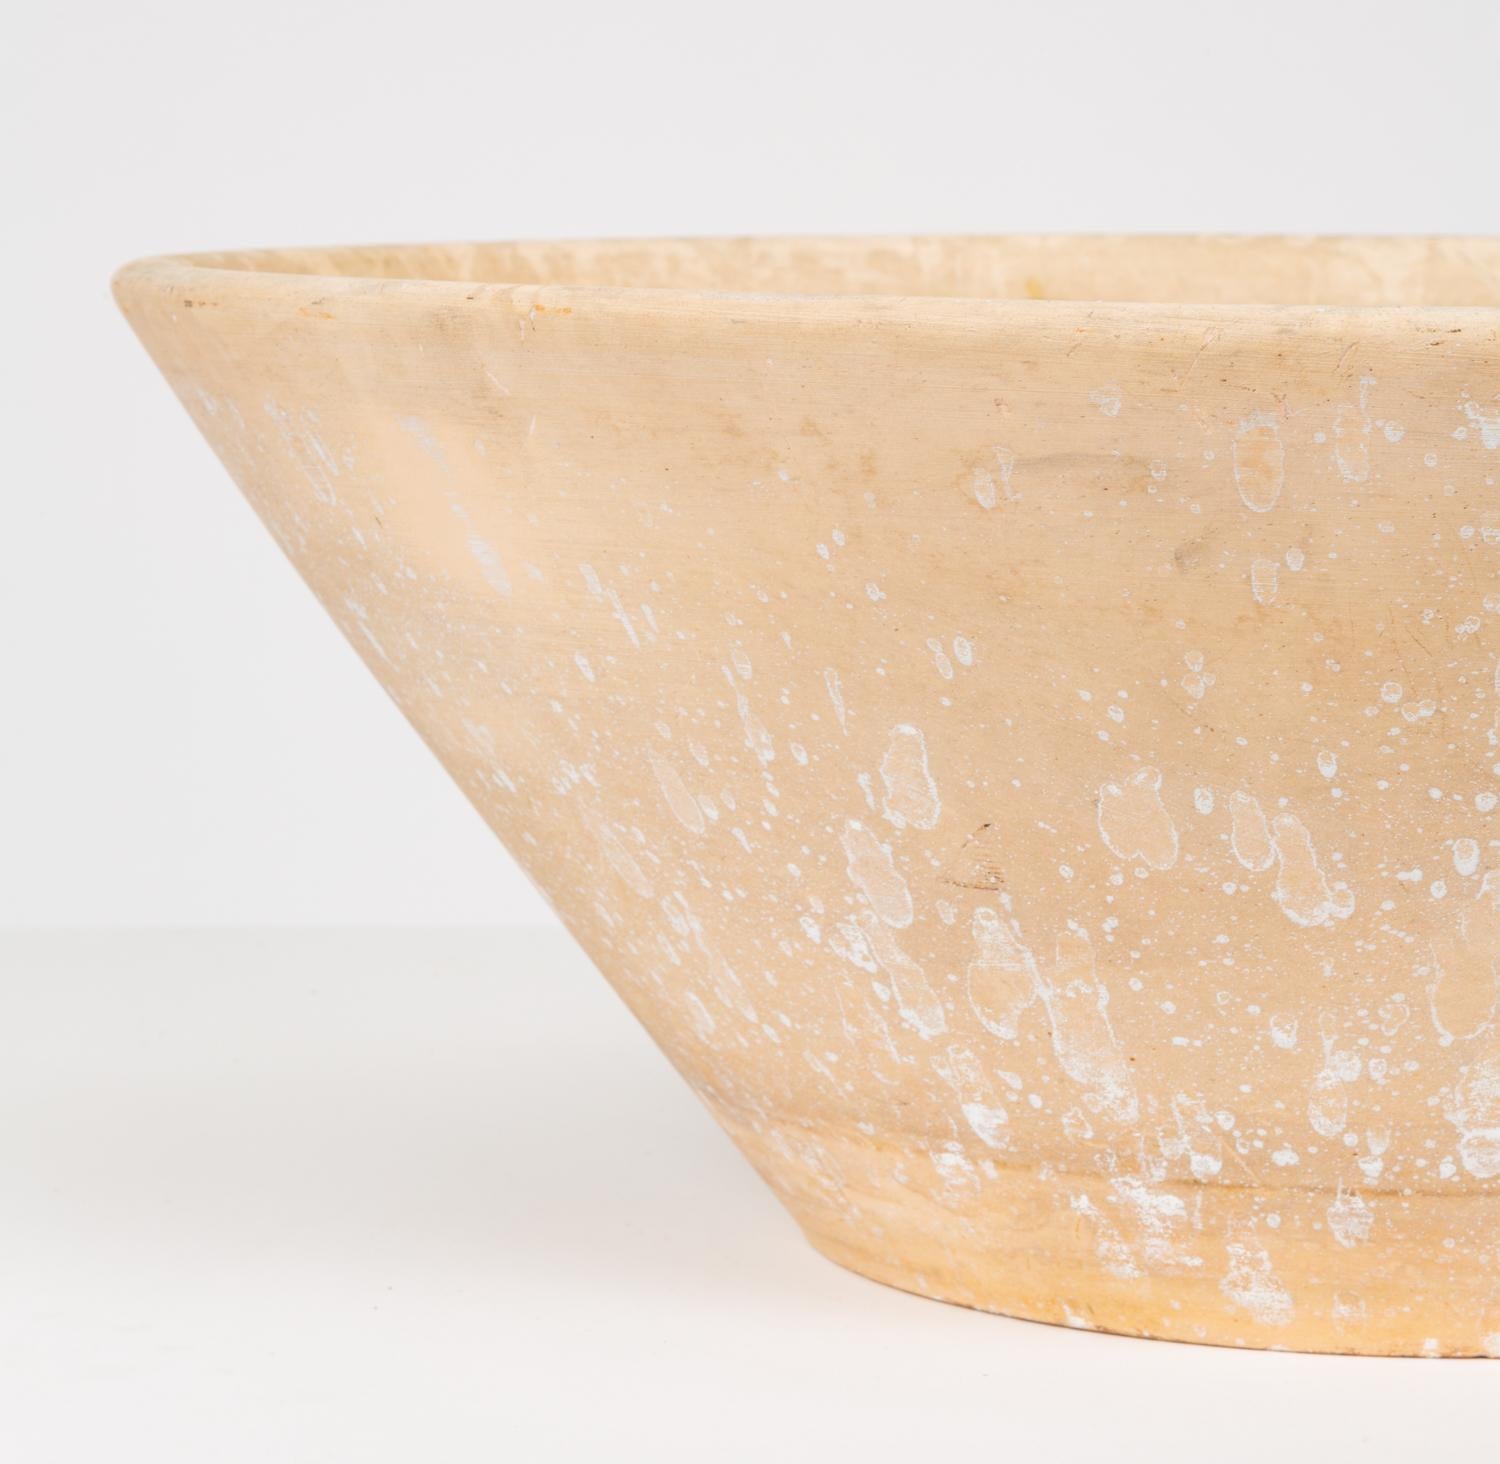 Ceramic Single Small “Wok” Planter by Lagardo Tackett for Architectural Pottery